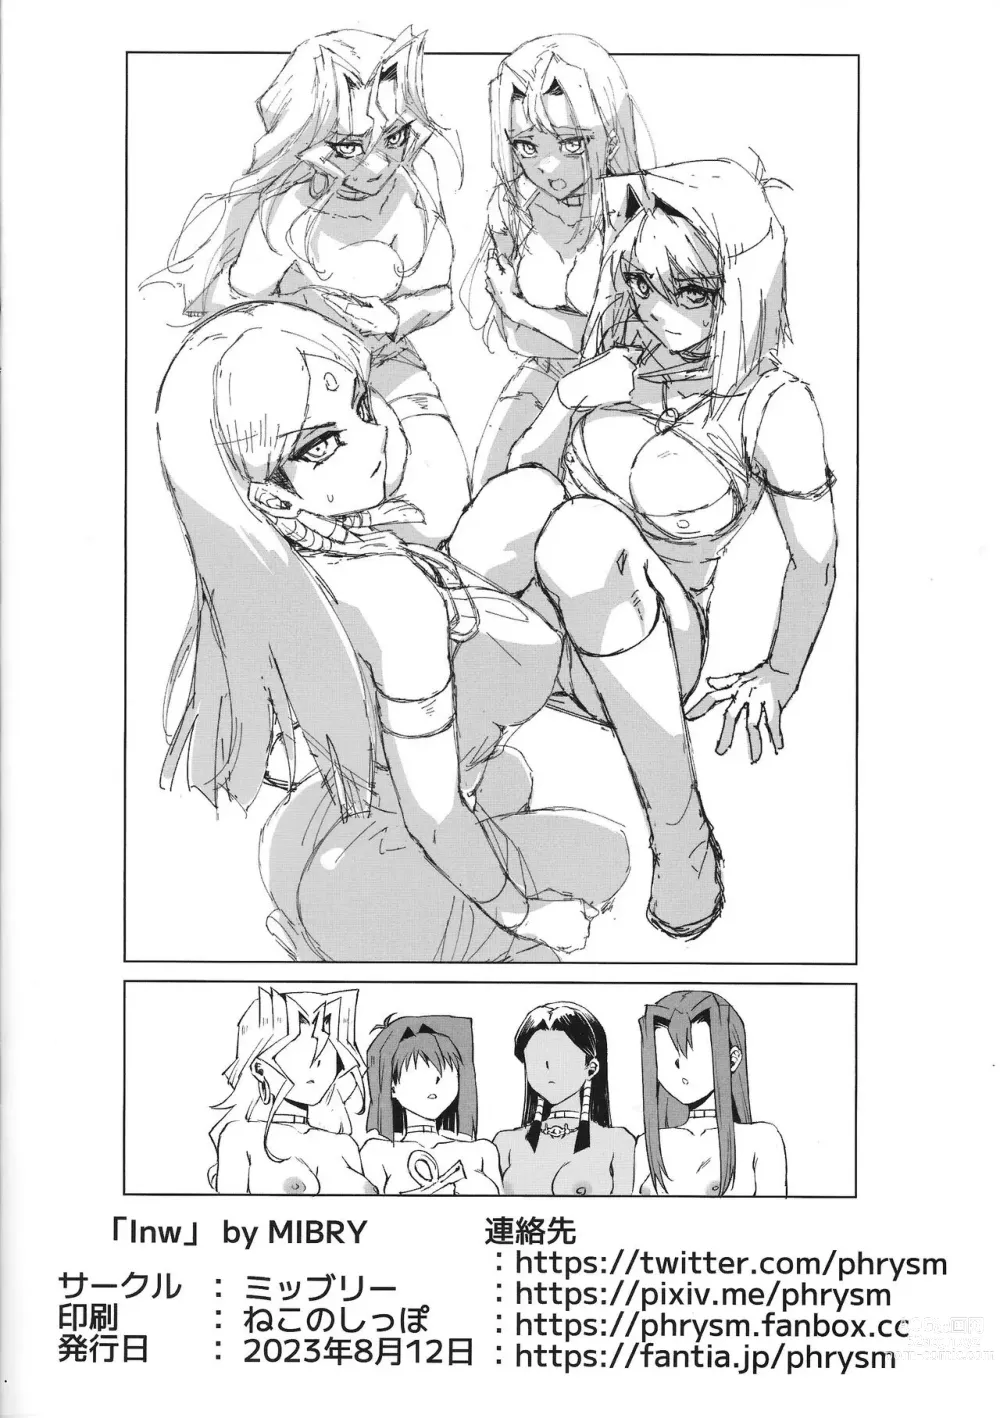 Page 8 of doujinshi Inw「Kami」